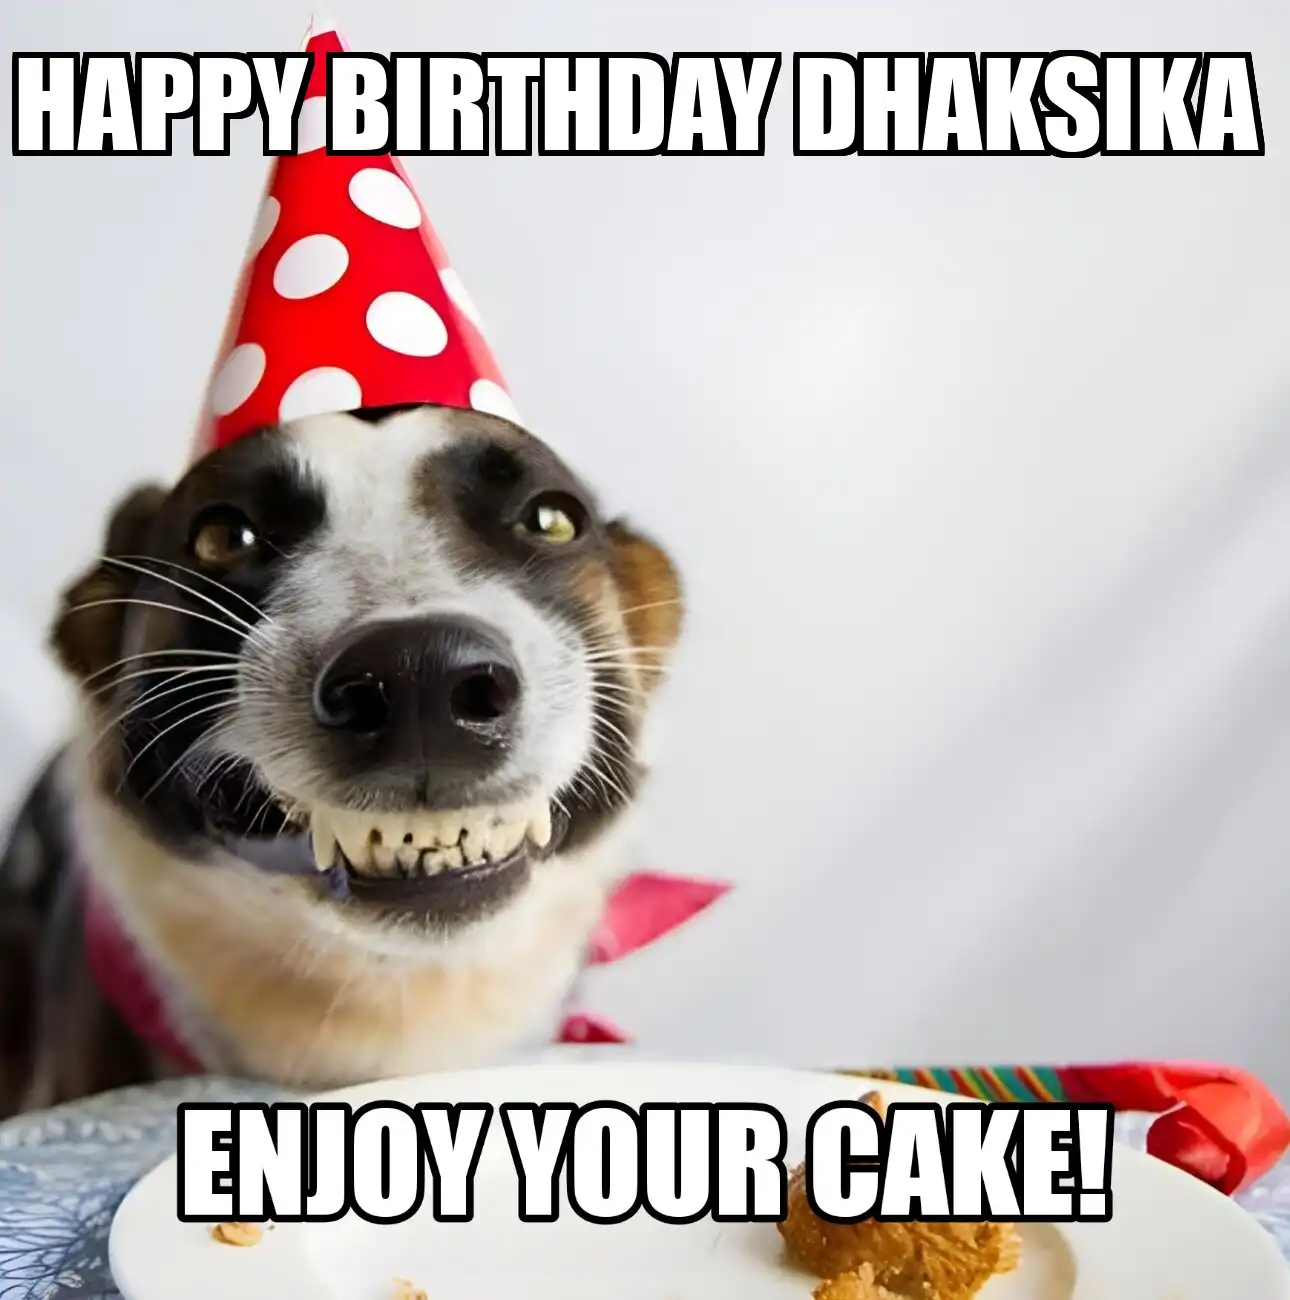 Happy Birthday Dhaksika Enjoy Your Cake Dog Meme